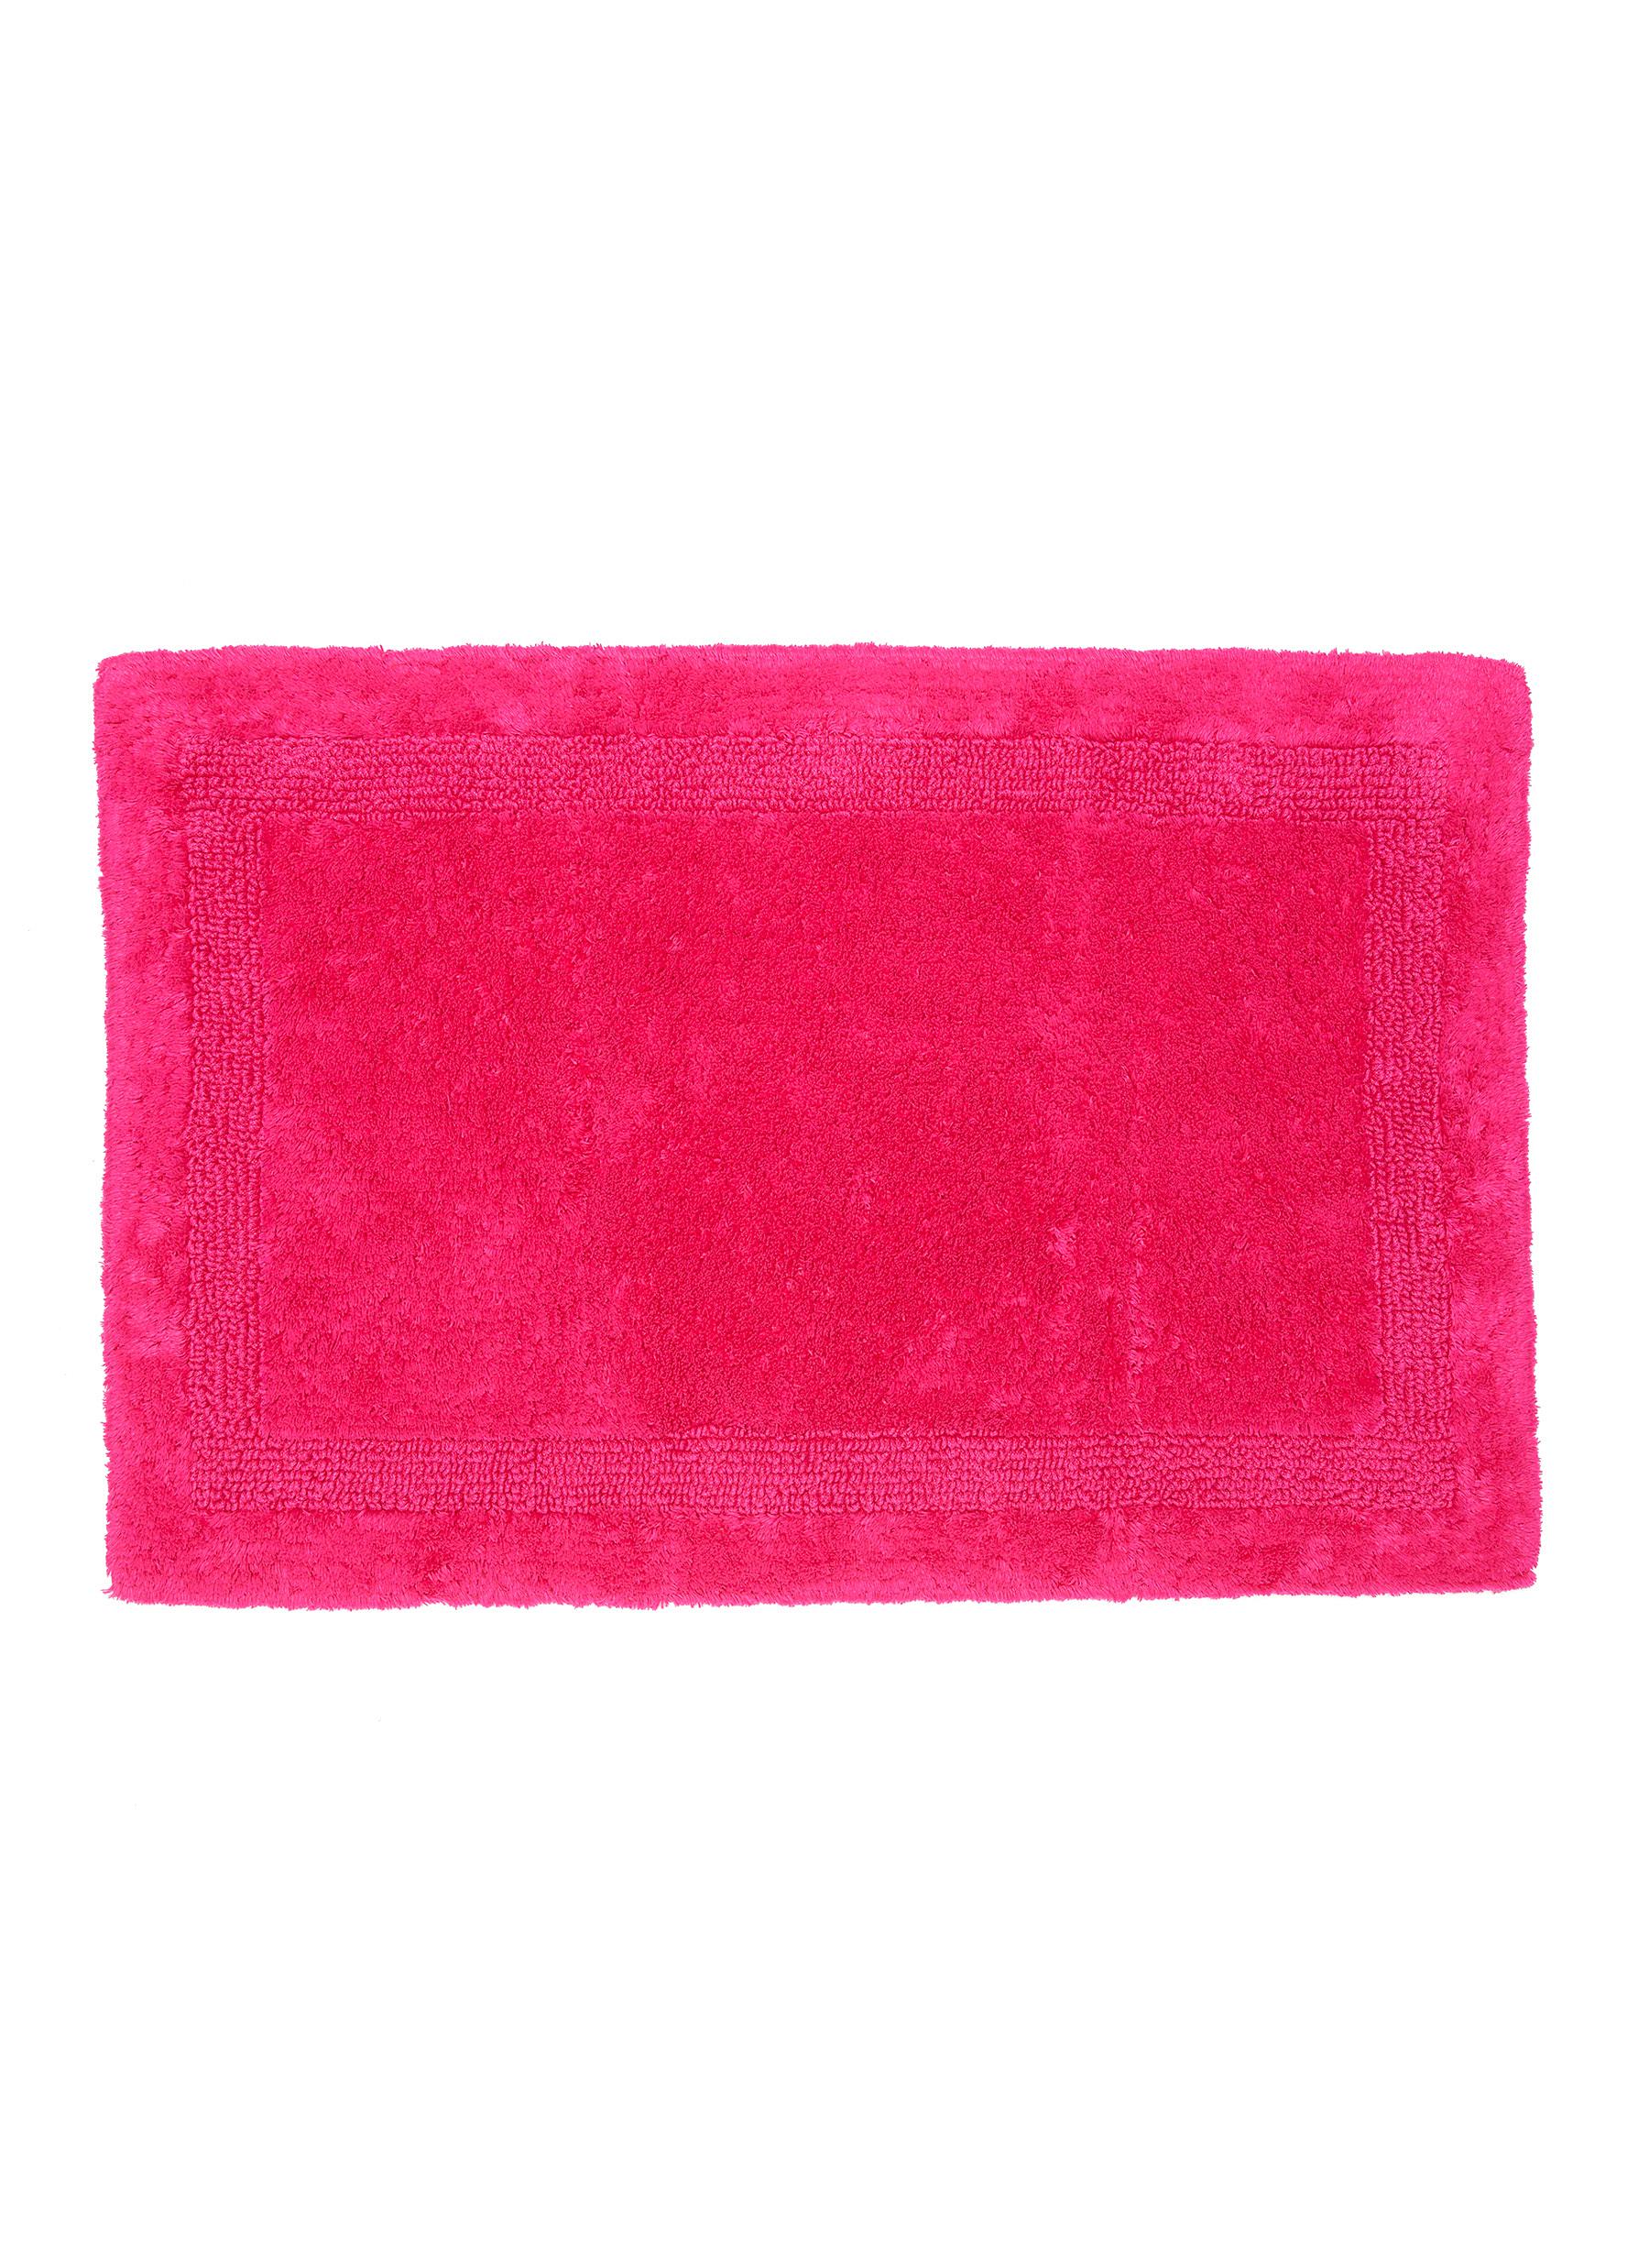 Abyss Reversible Cotton Bath Mat - Happy Pink